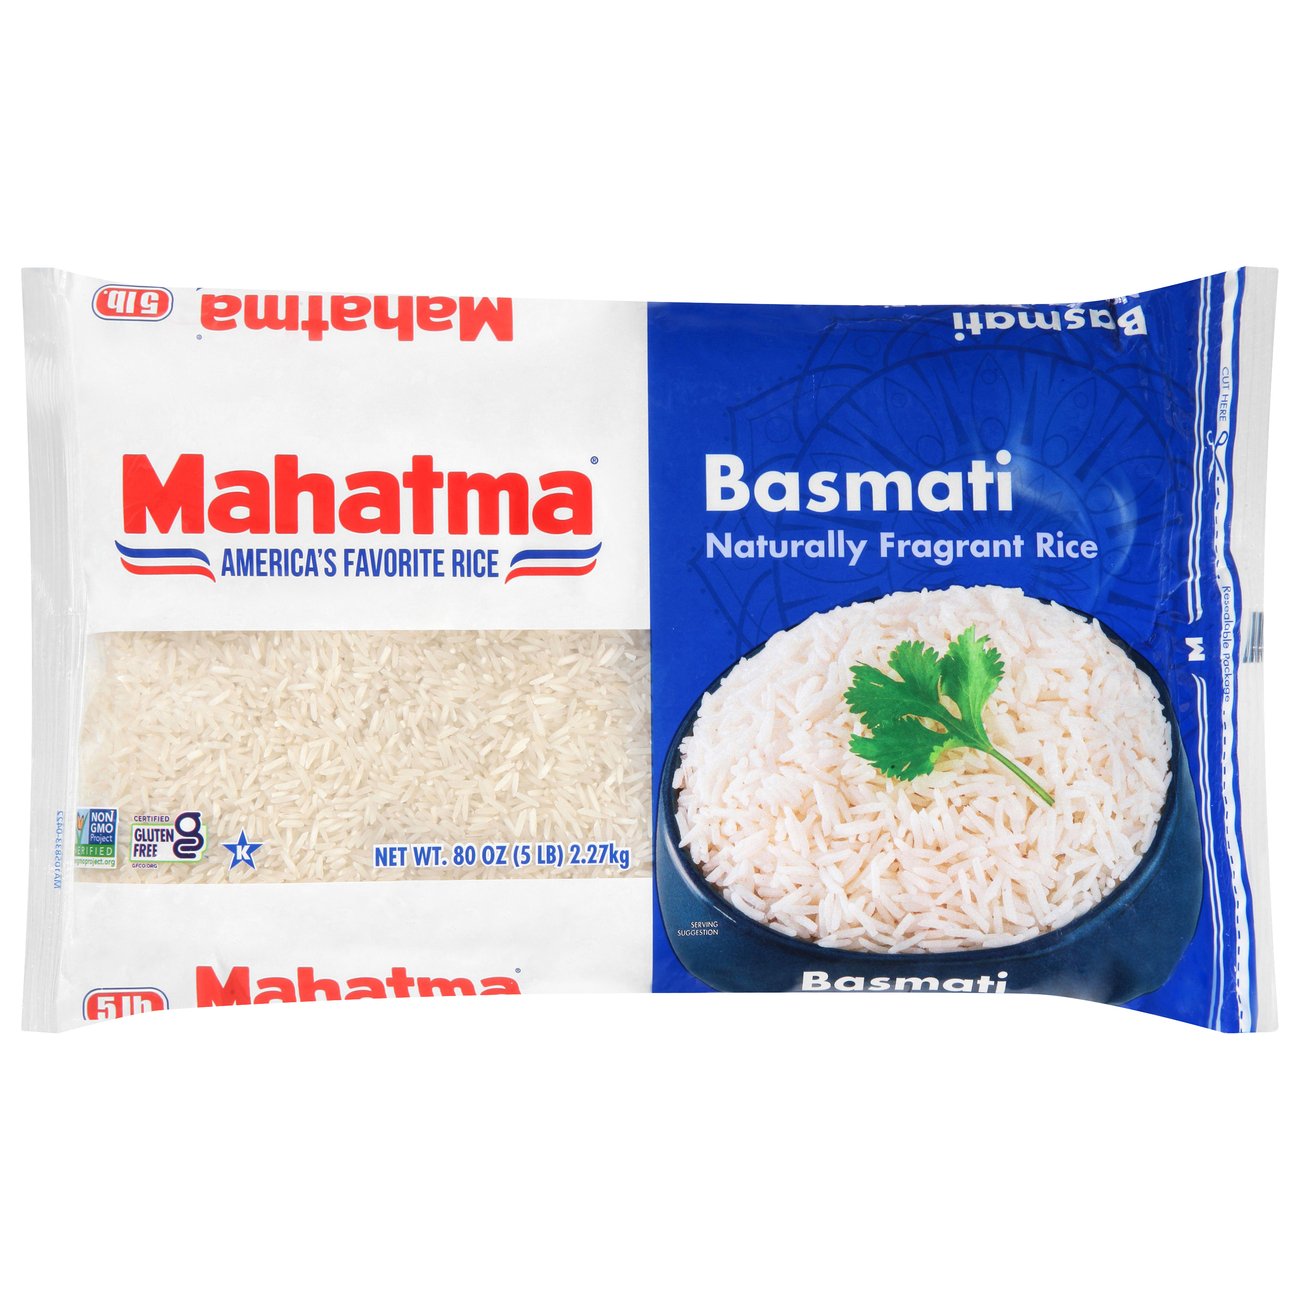 Mahatma Basmati Rice - Shop Rice & Grains at H-E-B